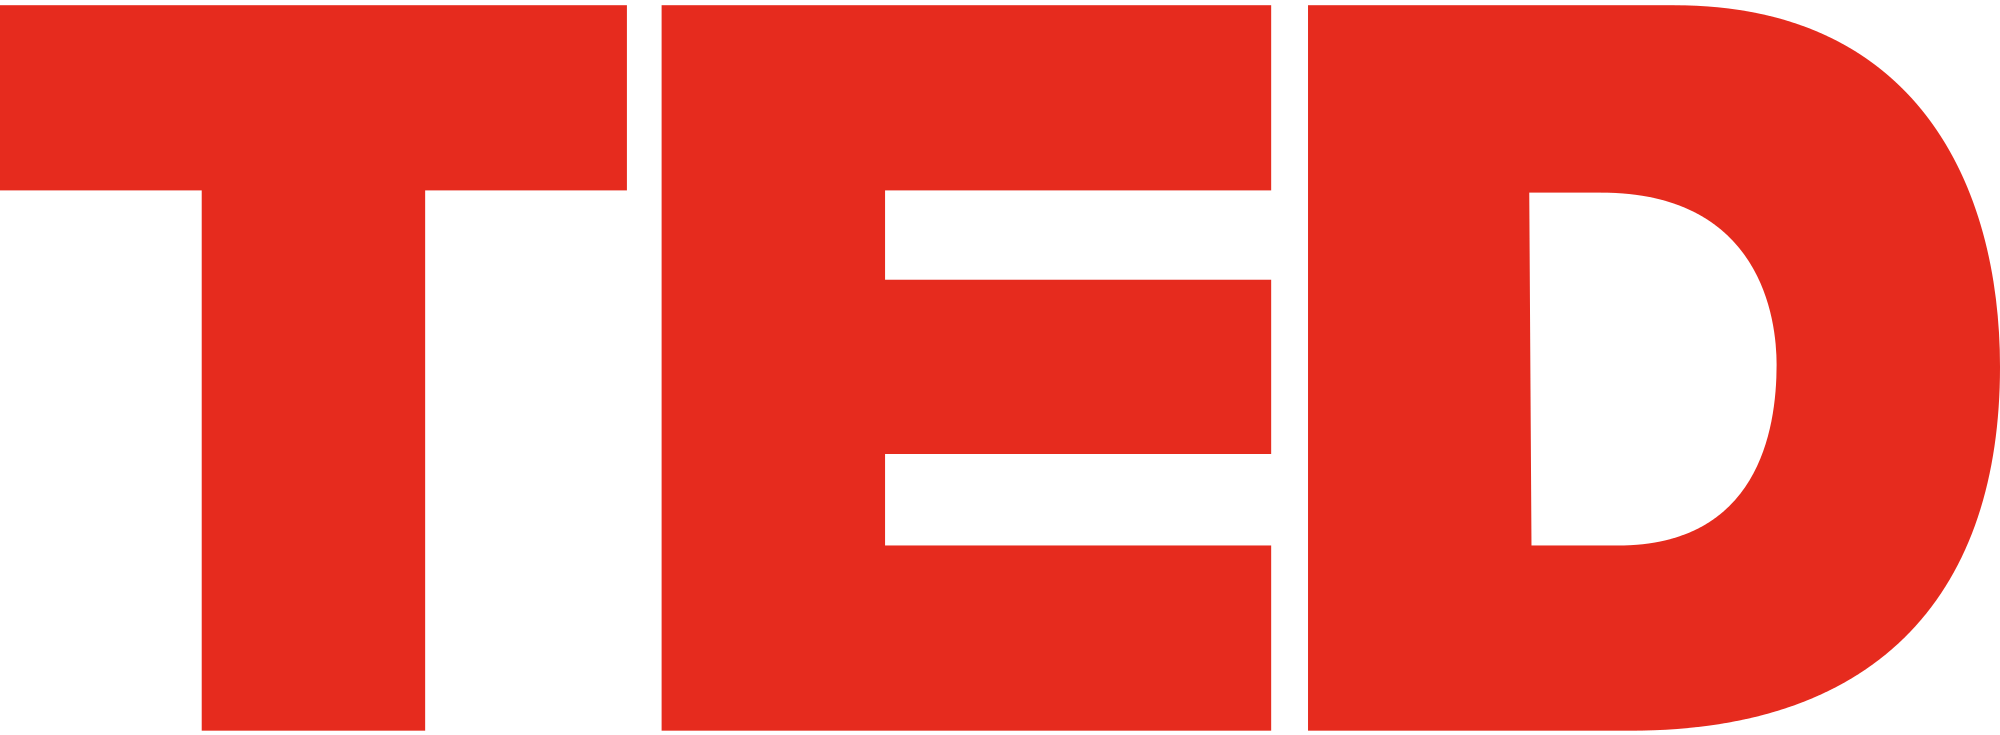 TED Talks Logo - TED three letter logo.svg